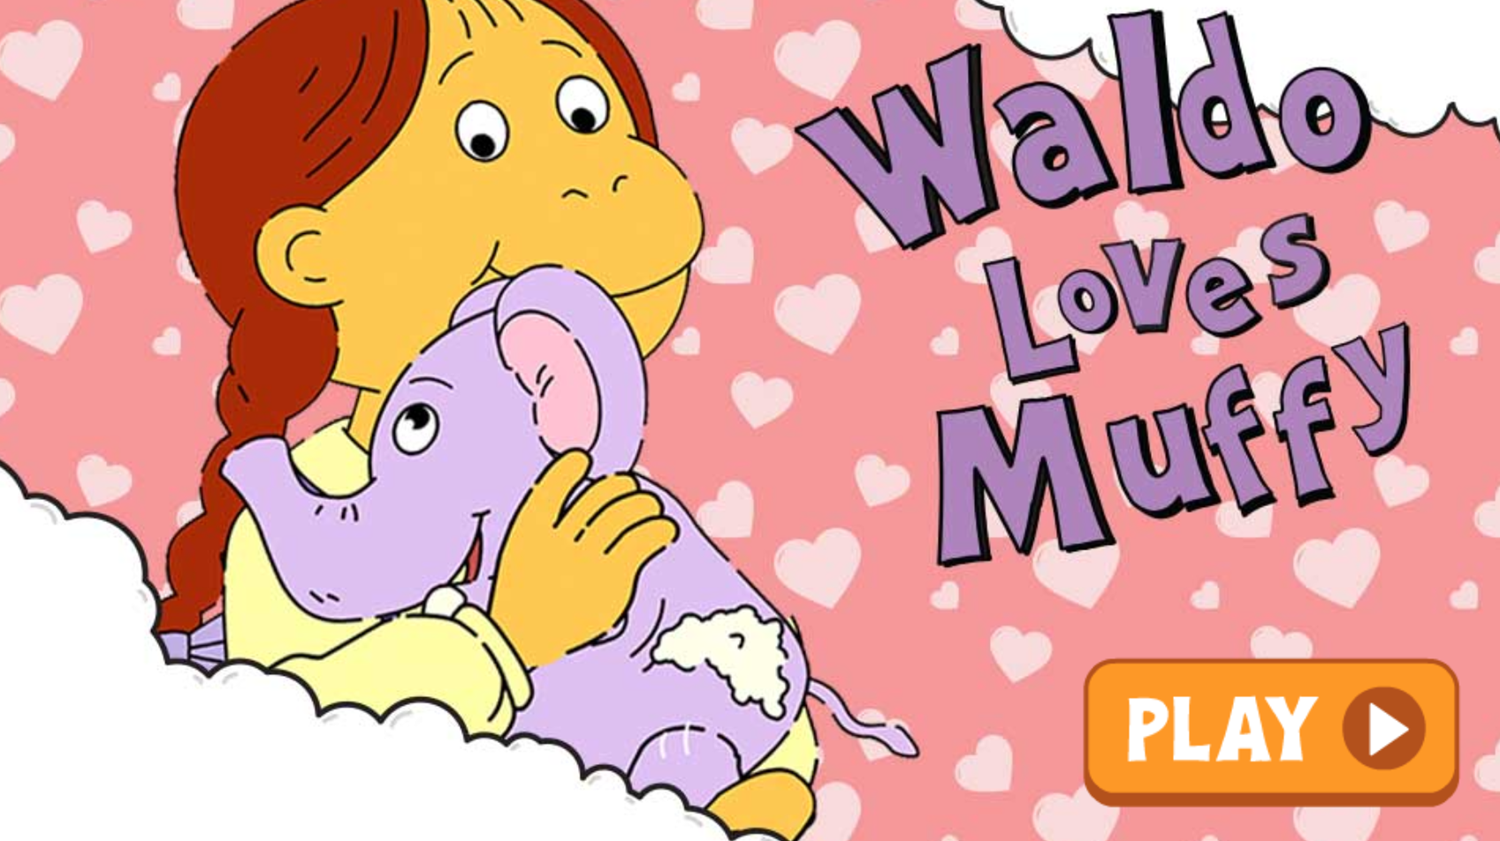 Arthur Waldo Loves Muffy Game Welcome Screen Screenshot.